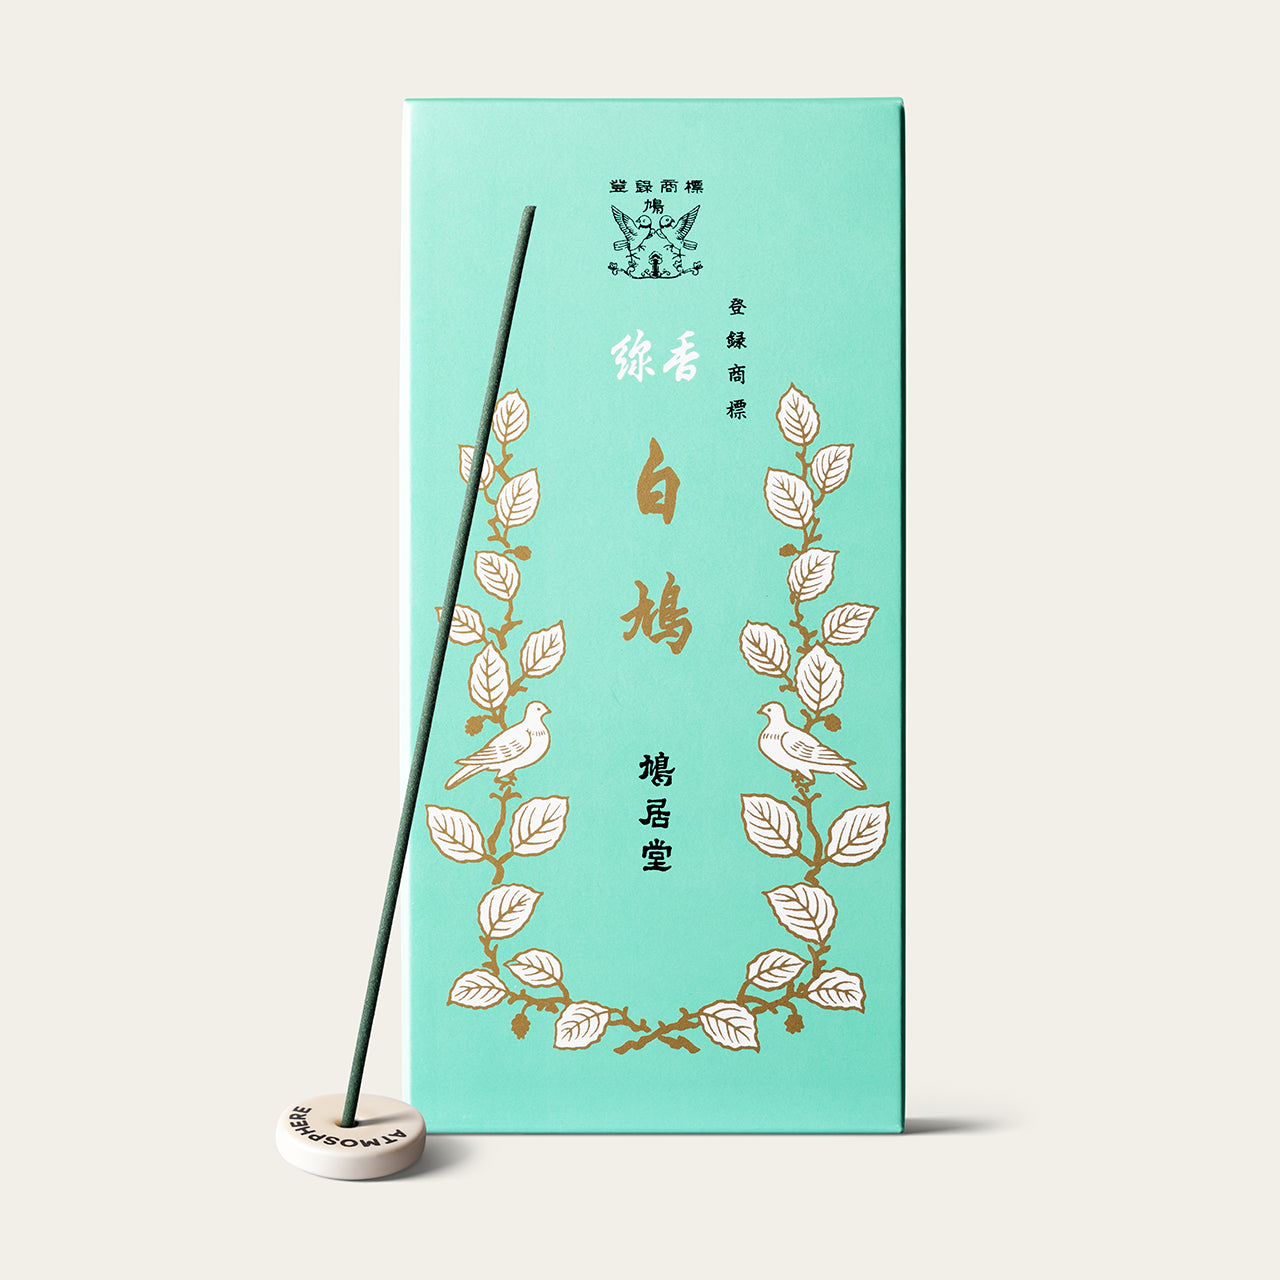 Kyukyodo White Dove Shirohato Japanese incense sticks (175 sticks) with Atmosphere ceramic incense holder